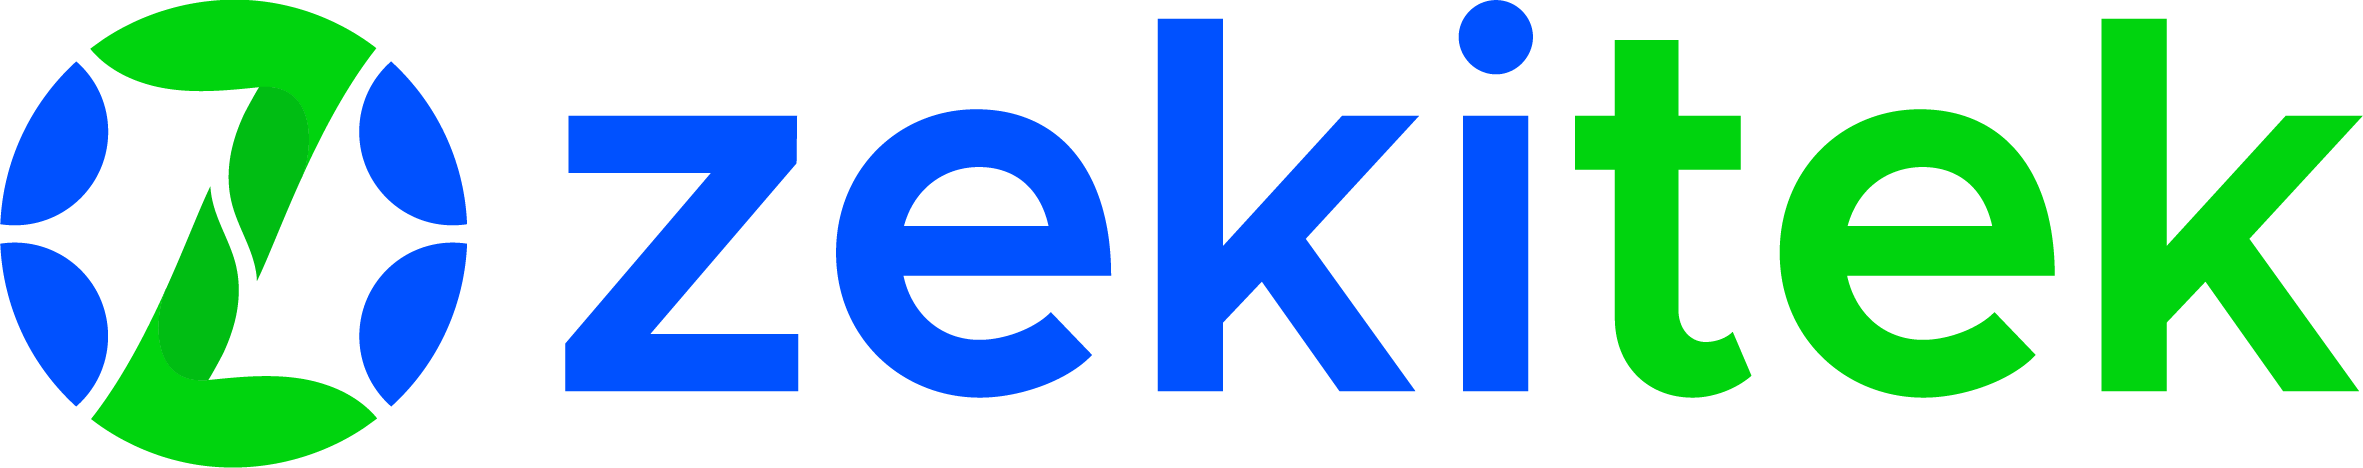 ZekiTek